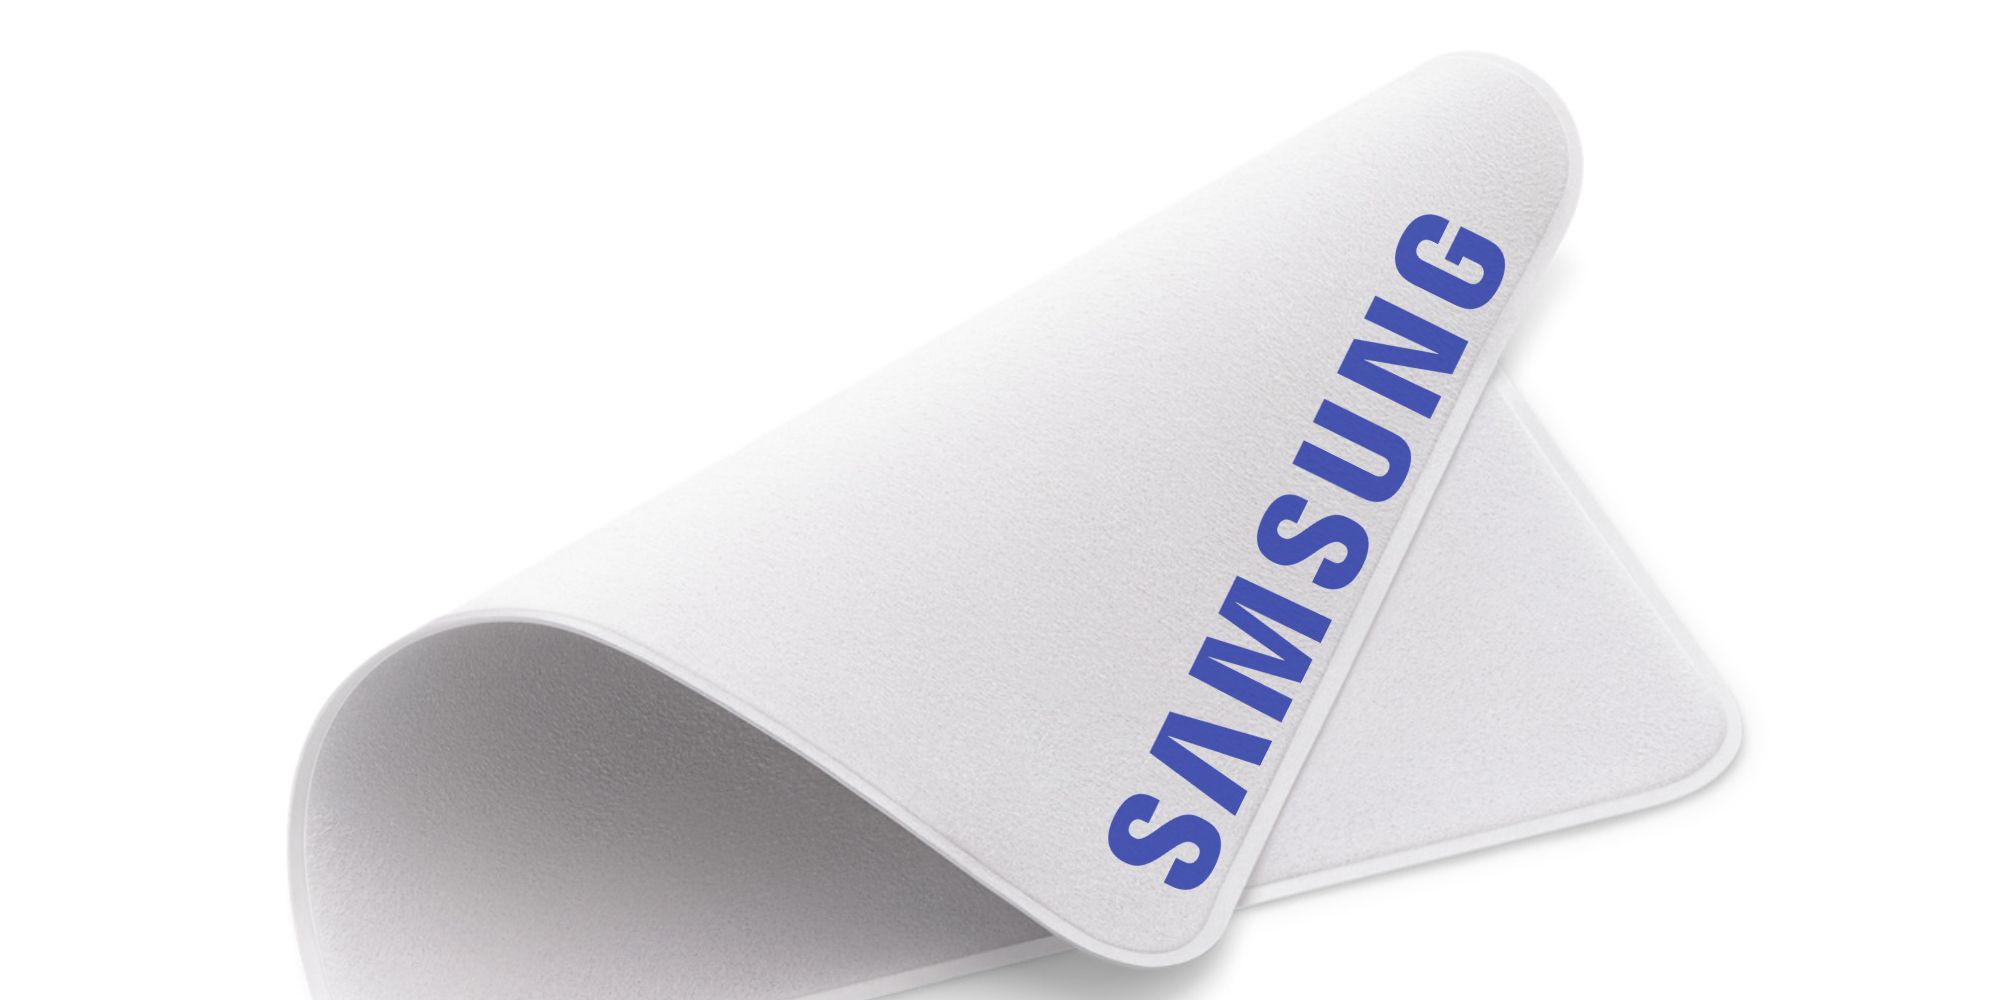 Apple's polishing cloth with a Samsung logo on it